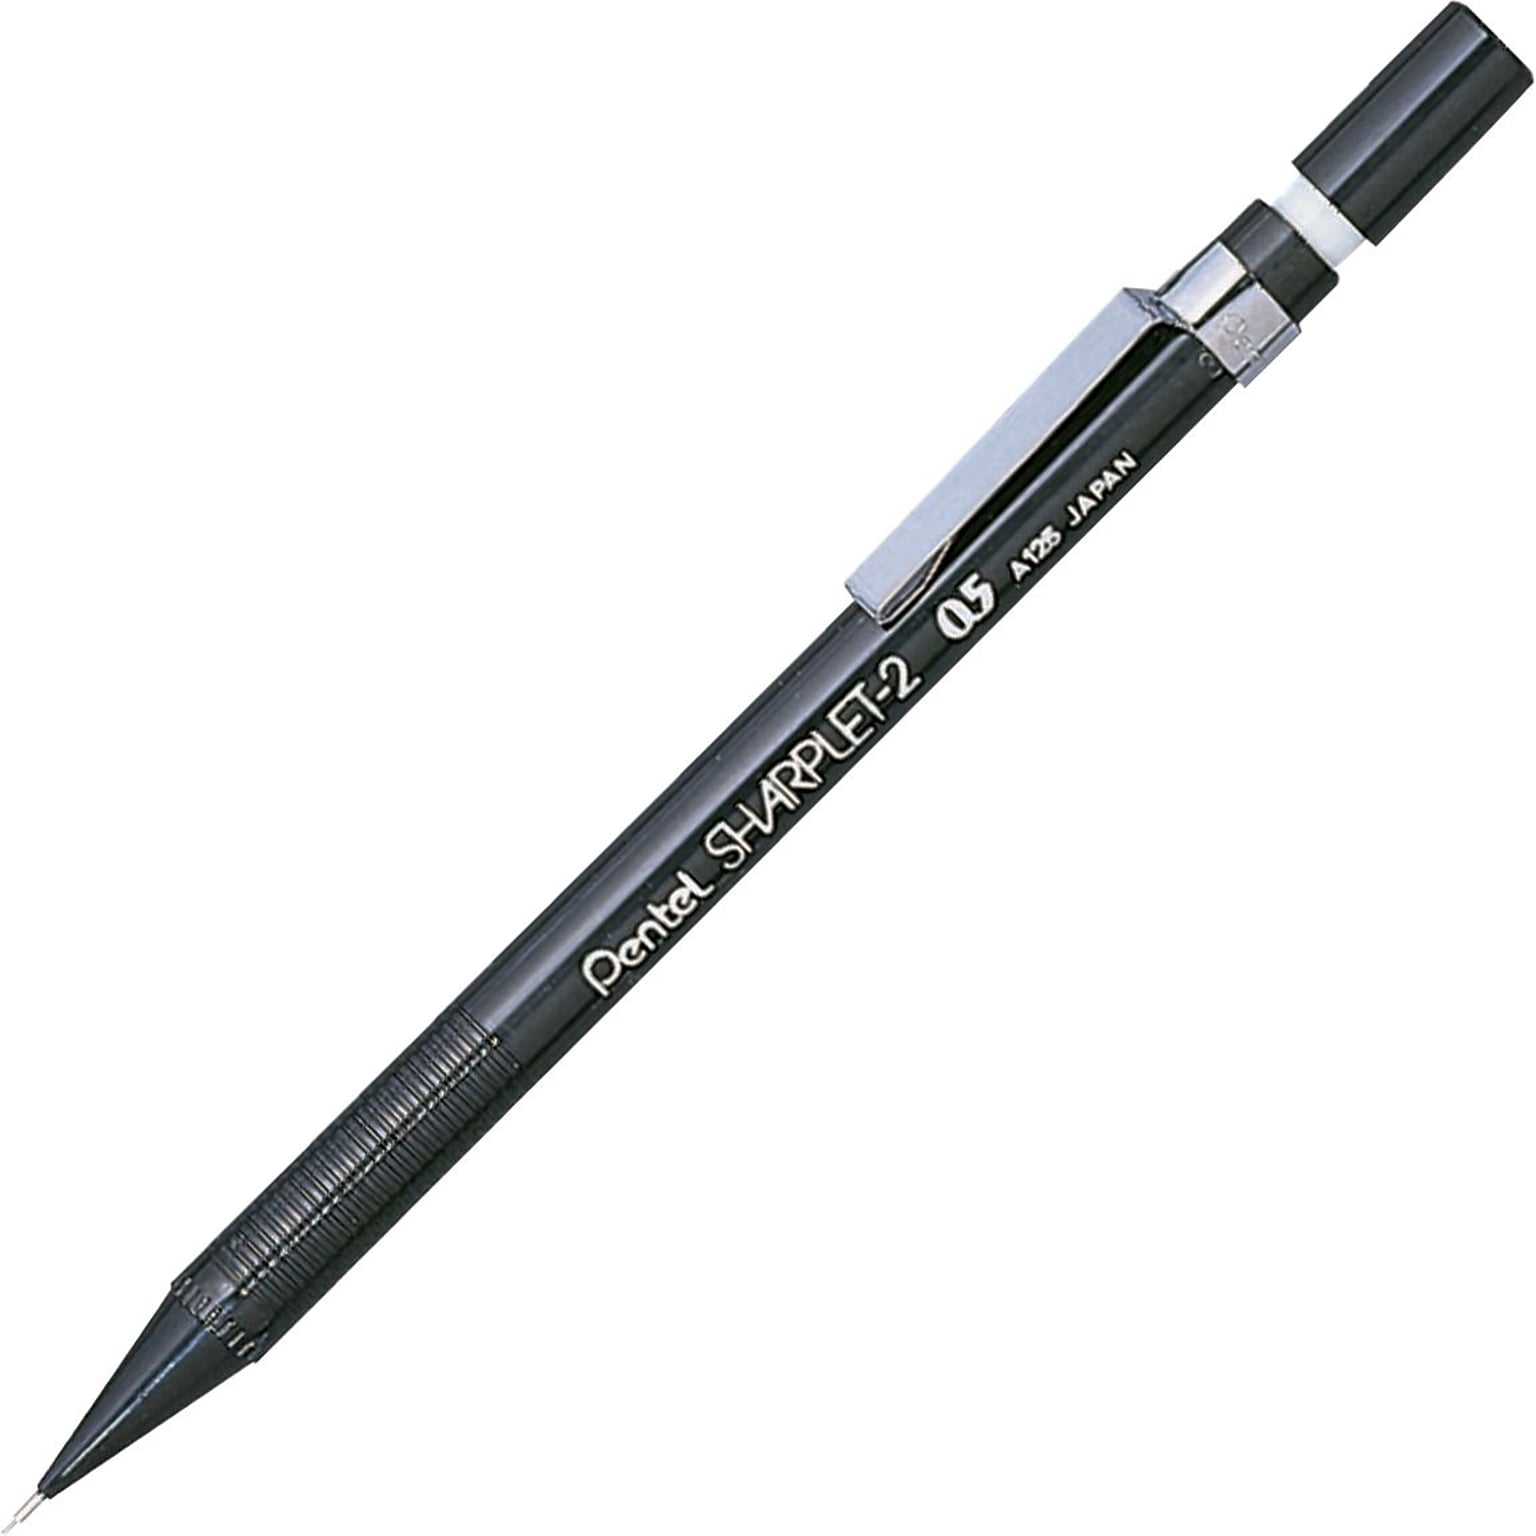 Pentel Sharplet-2 Mechanical Pencil, 0.5mm, #2 Medium Lead (A125A)